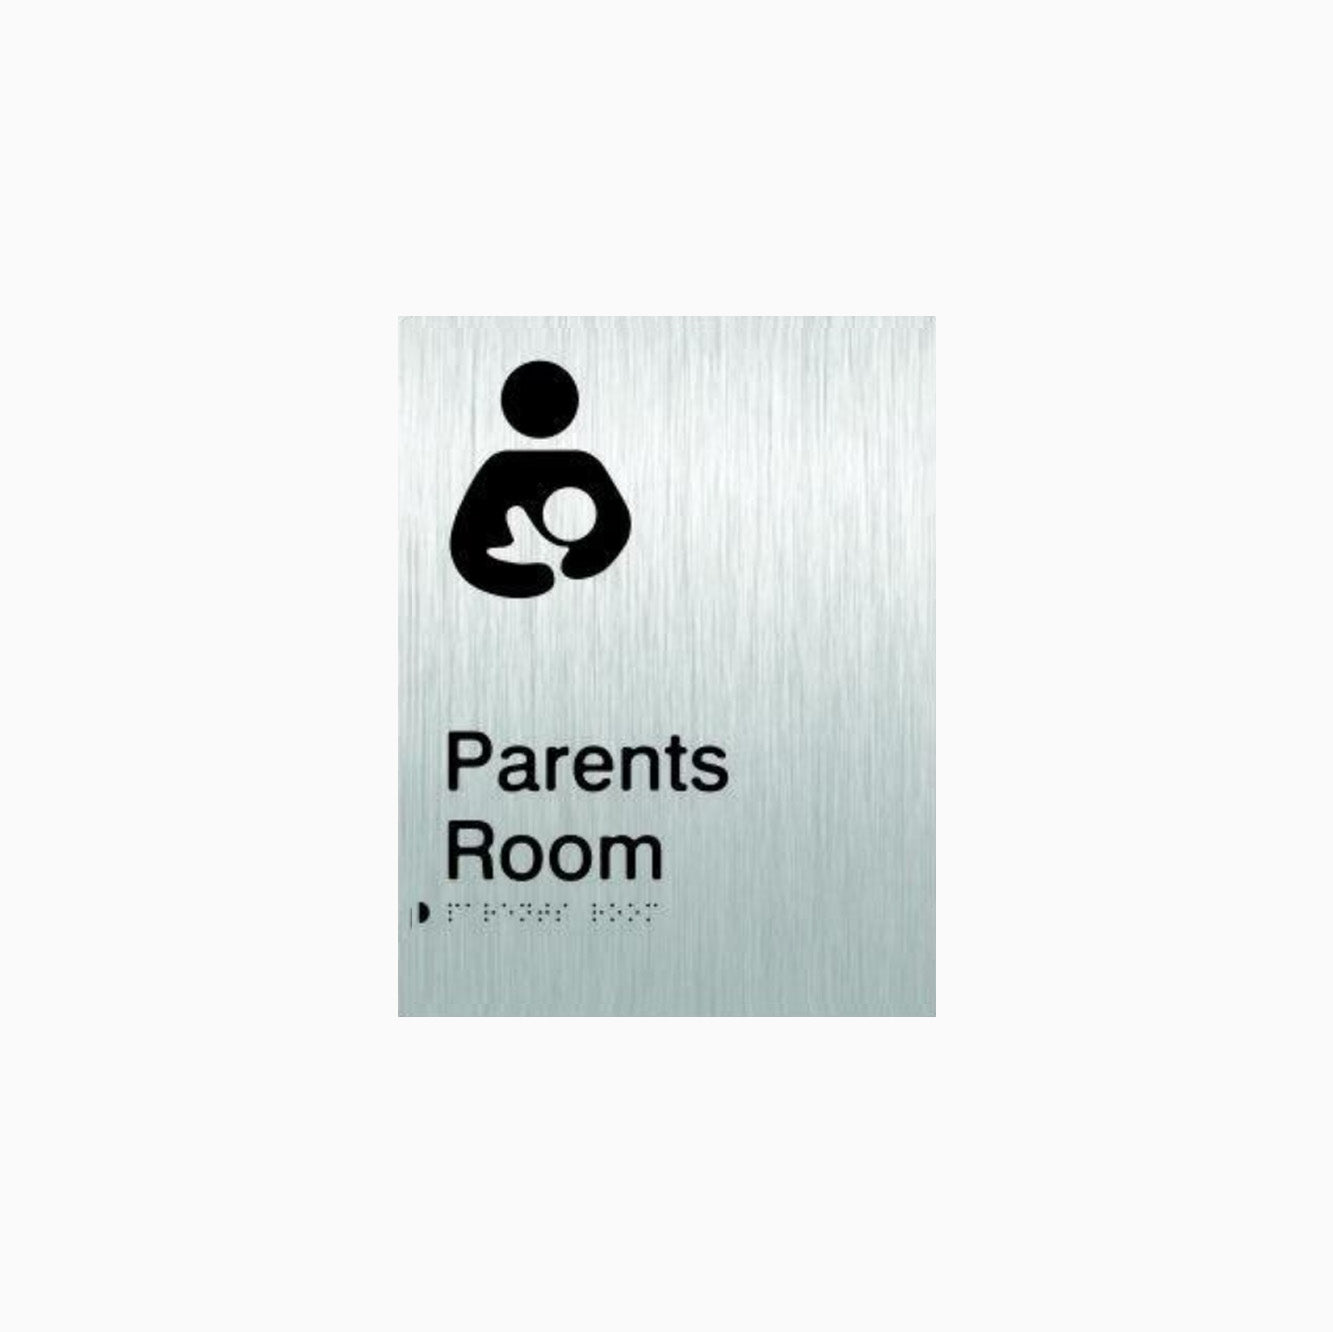 PARENTS ROOM